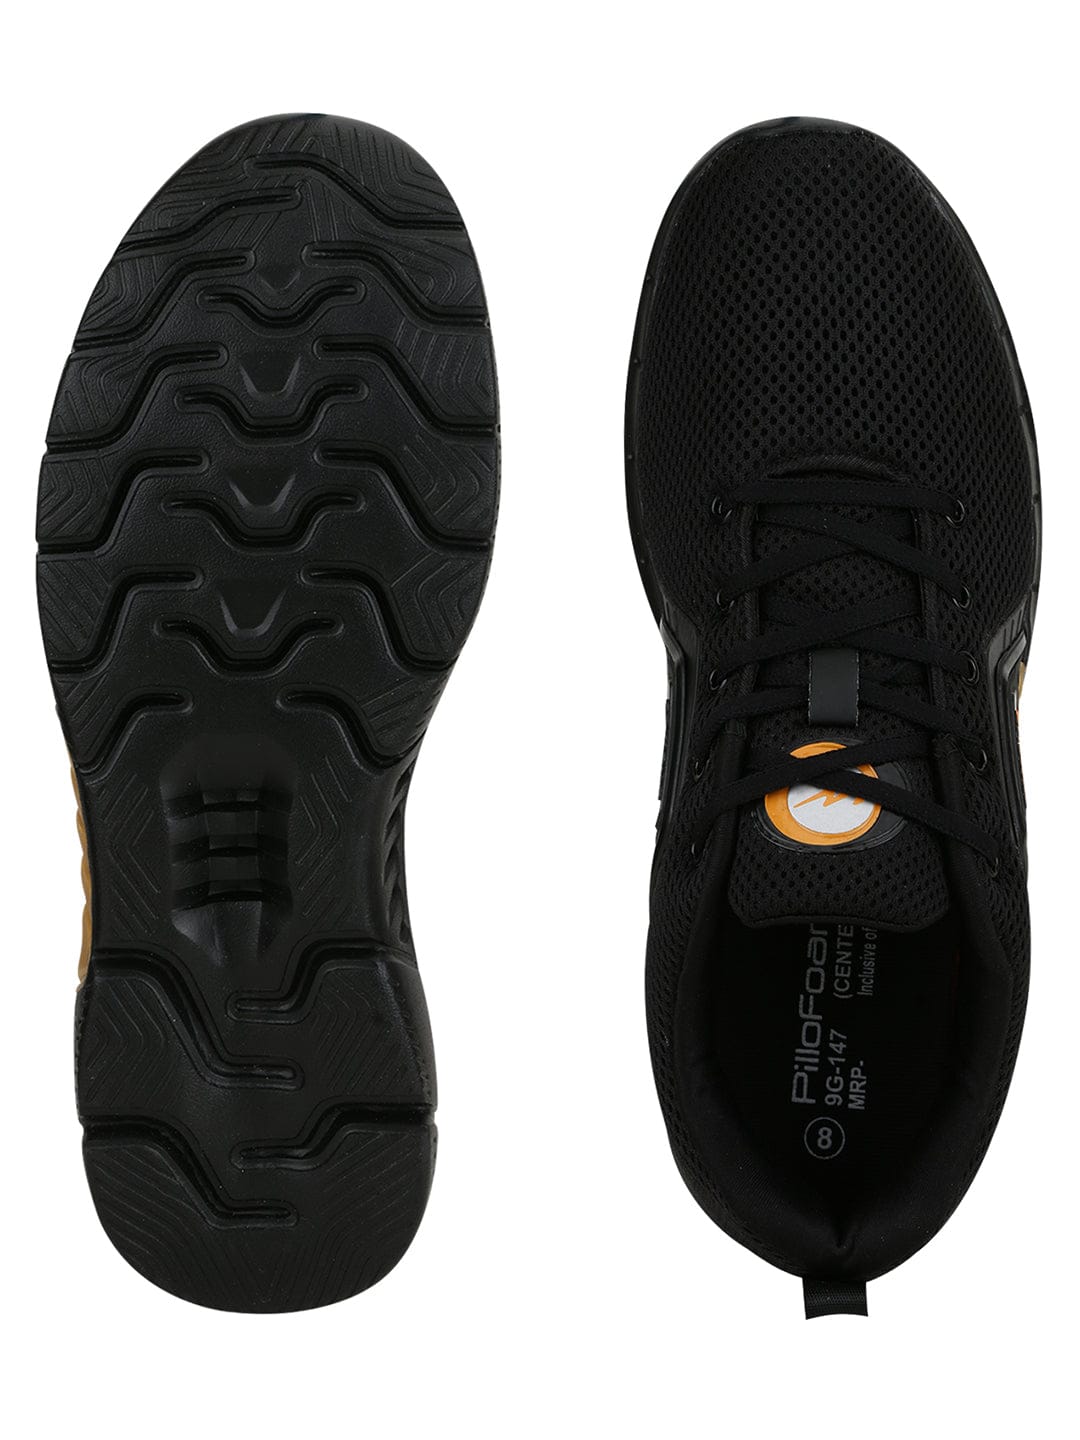 Buy CENTER Black Men's Running Shoes online | Campus Shoes